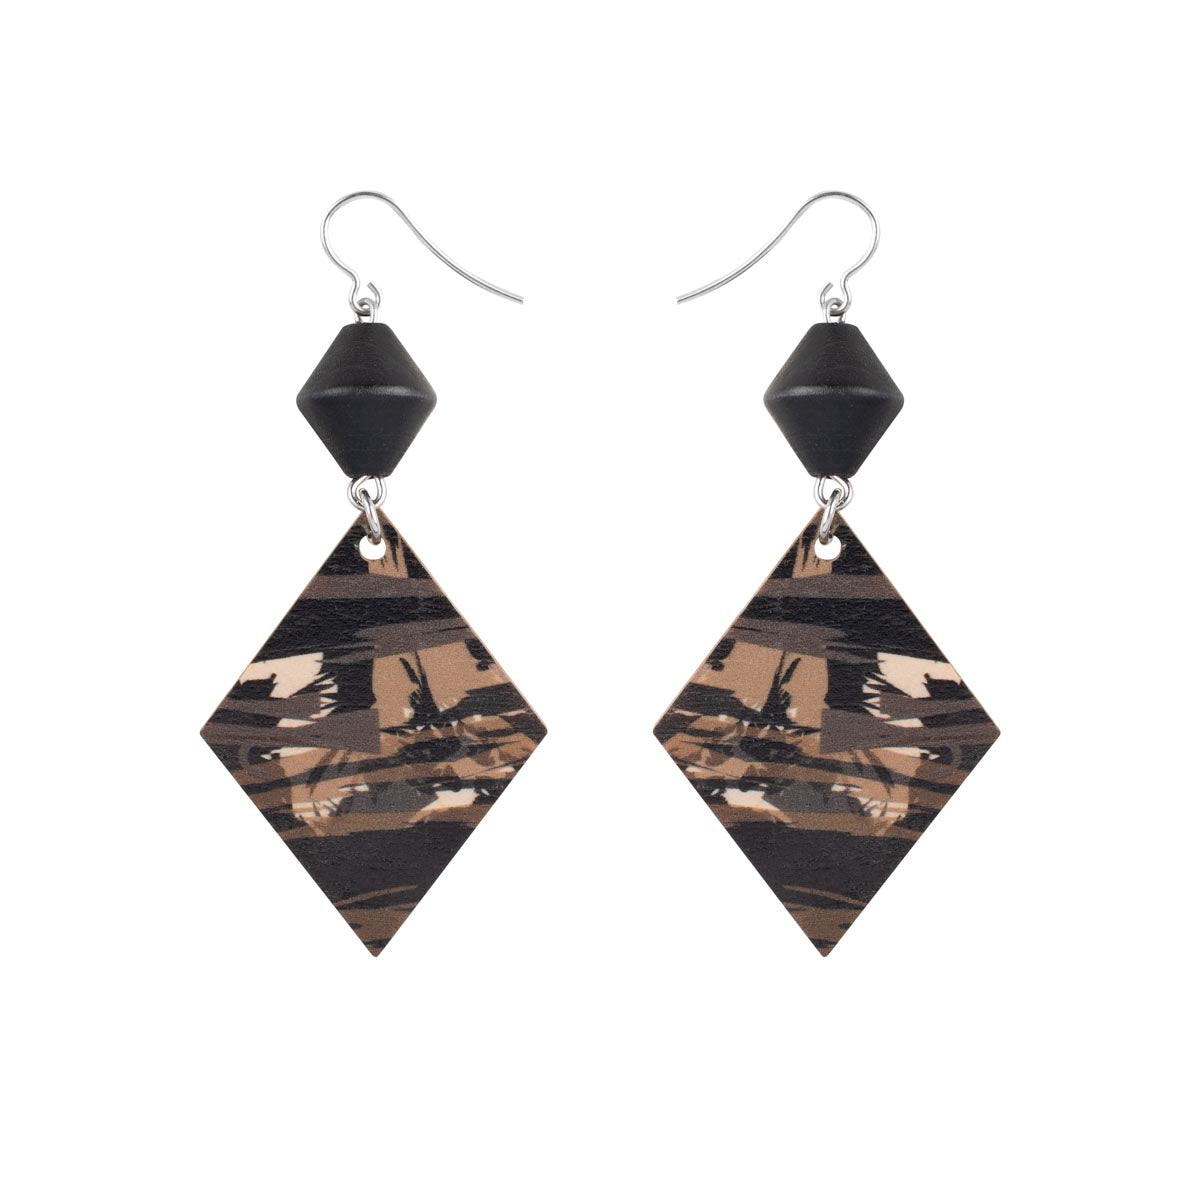 Tallinna earrings, black